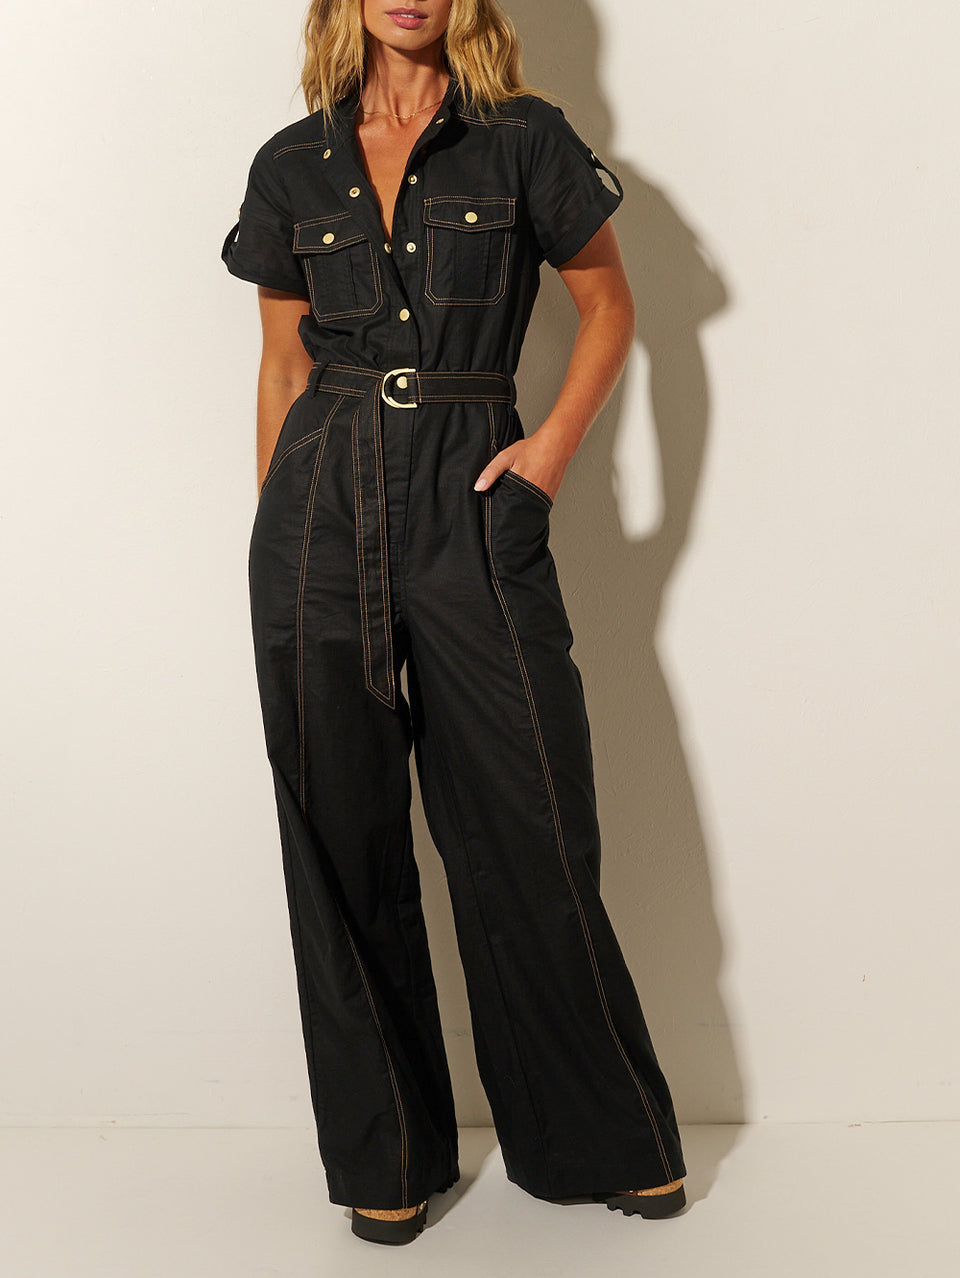 Close up: Studio model wears the KIVARI Ebony Jumpsuit: a black linen jumpsuit with gold buttons, topstitch details, a button-front with signature hardware and belt.